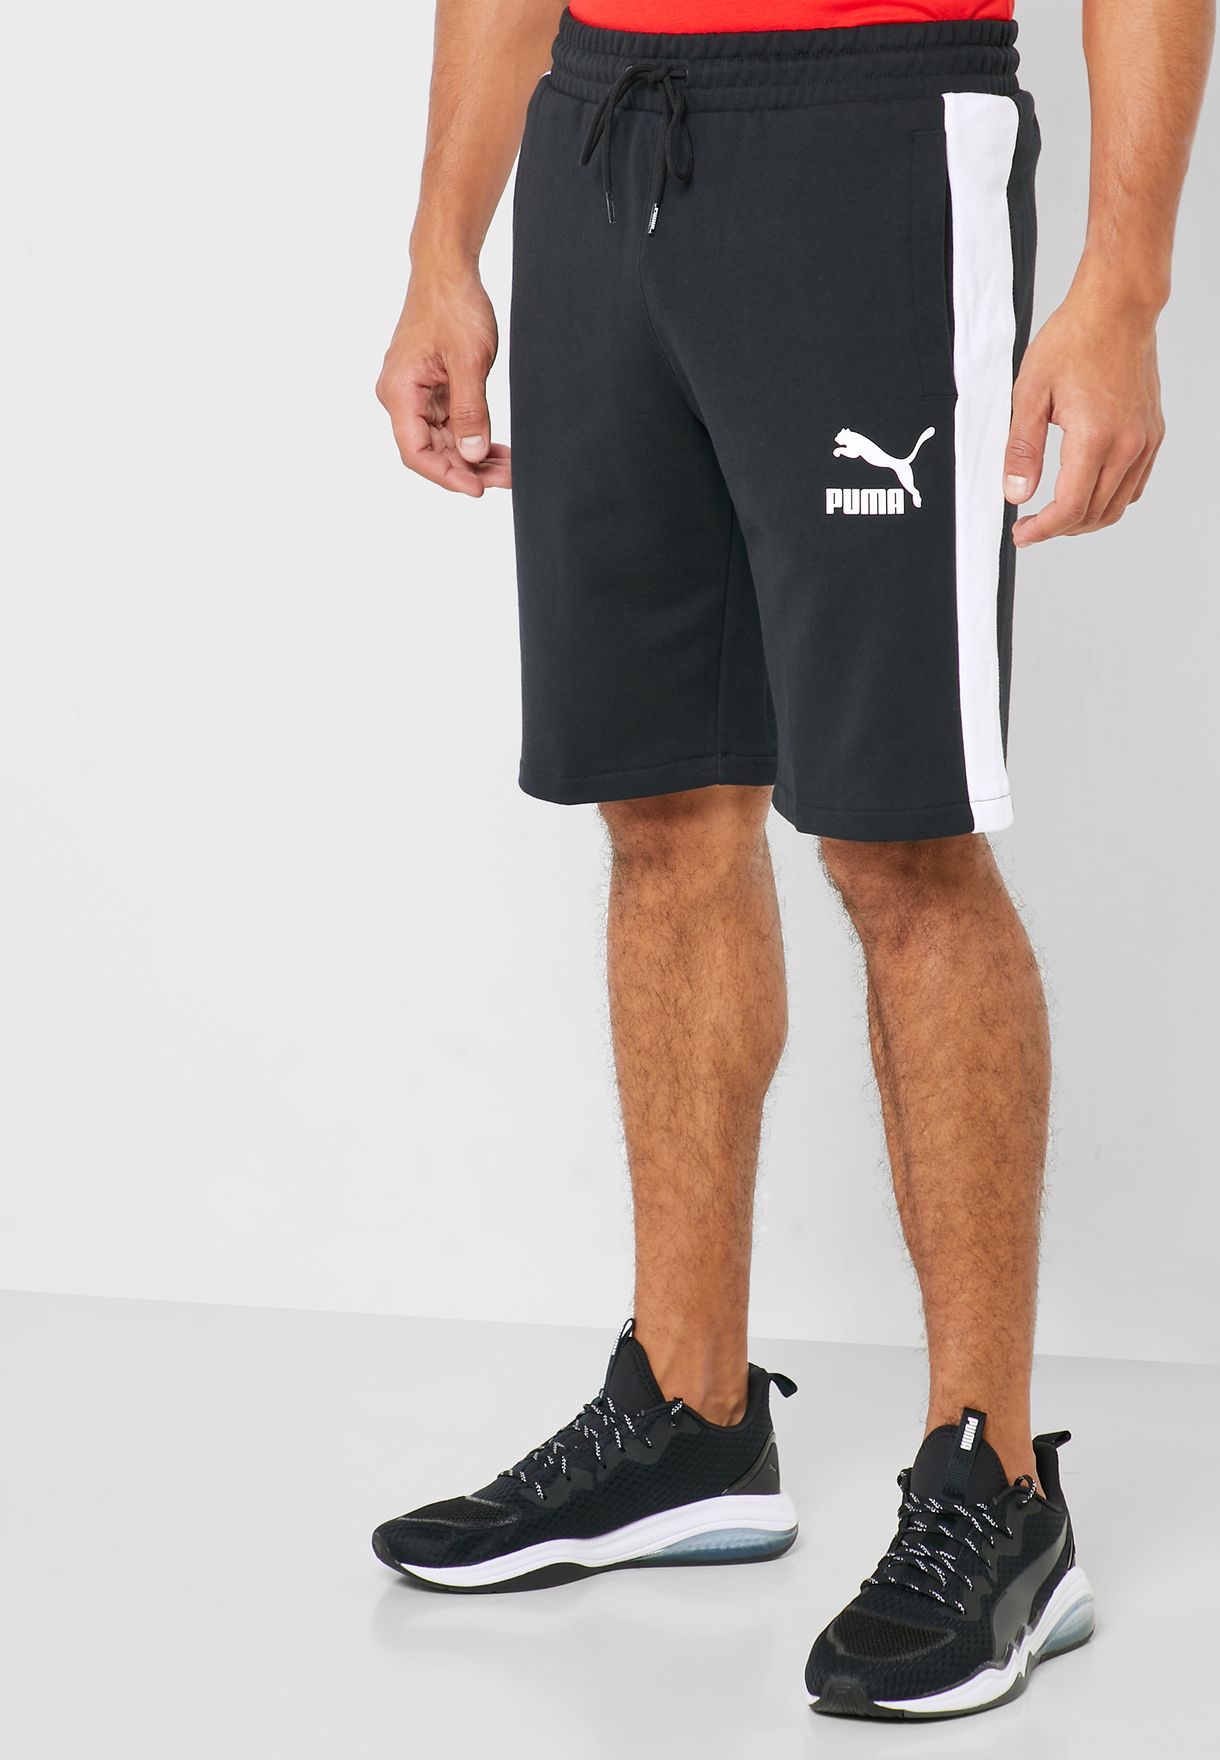 puma t7 shorts